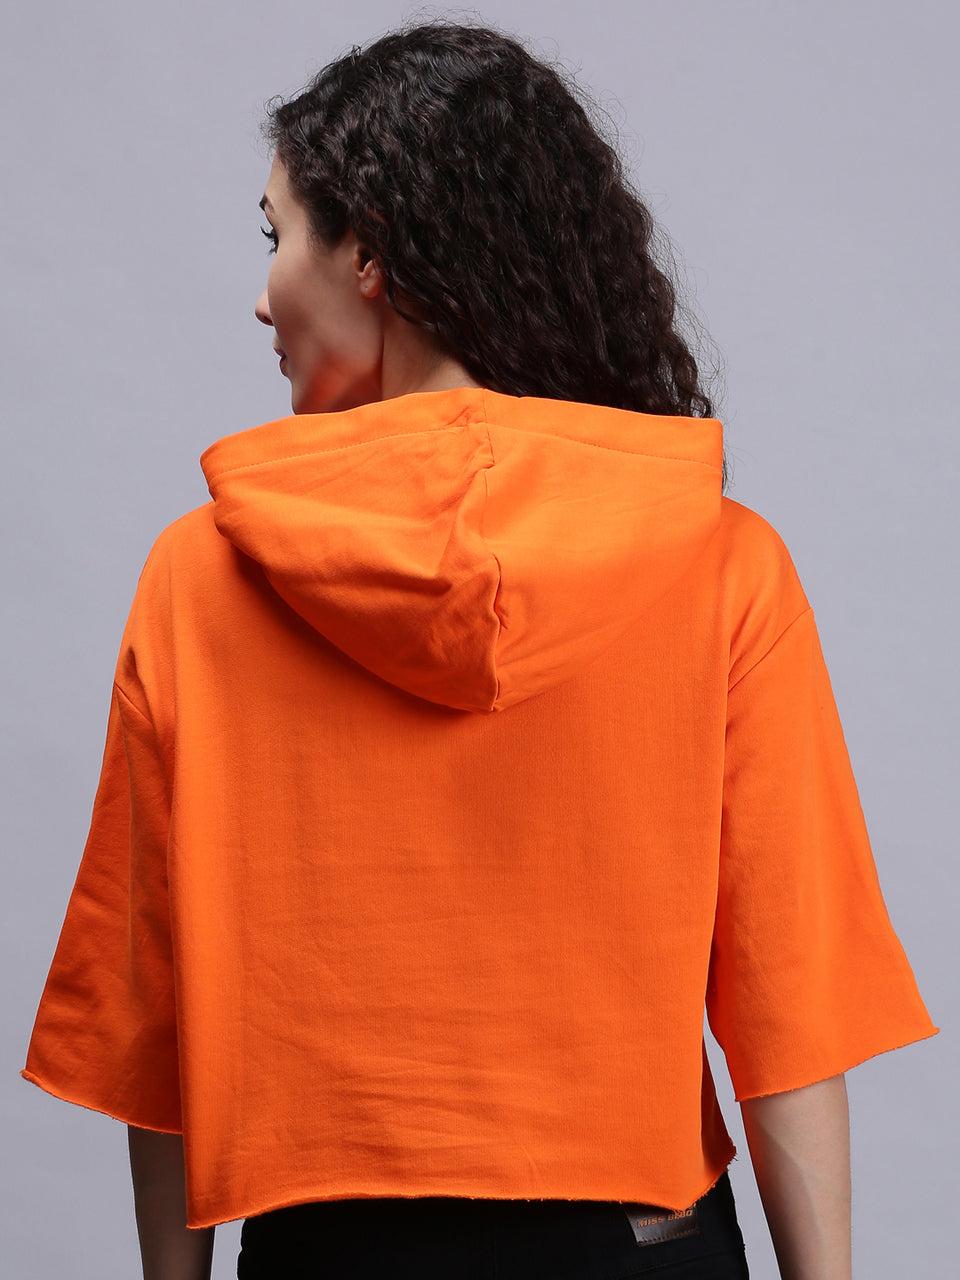 women solid orange 3/4 sleeve hooded sweatshirt